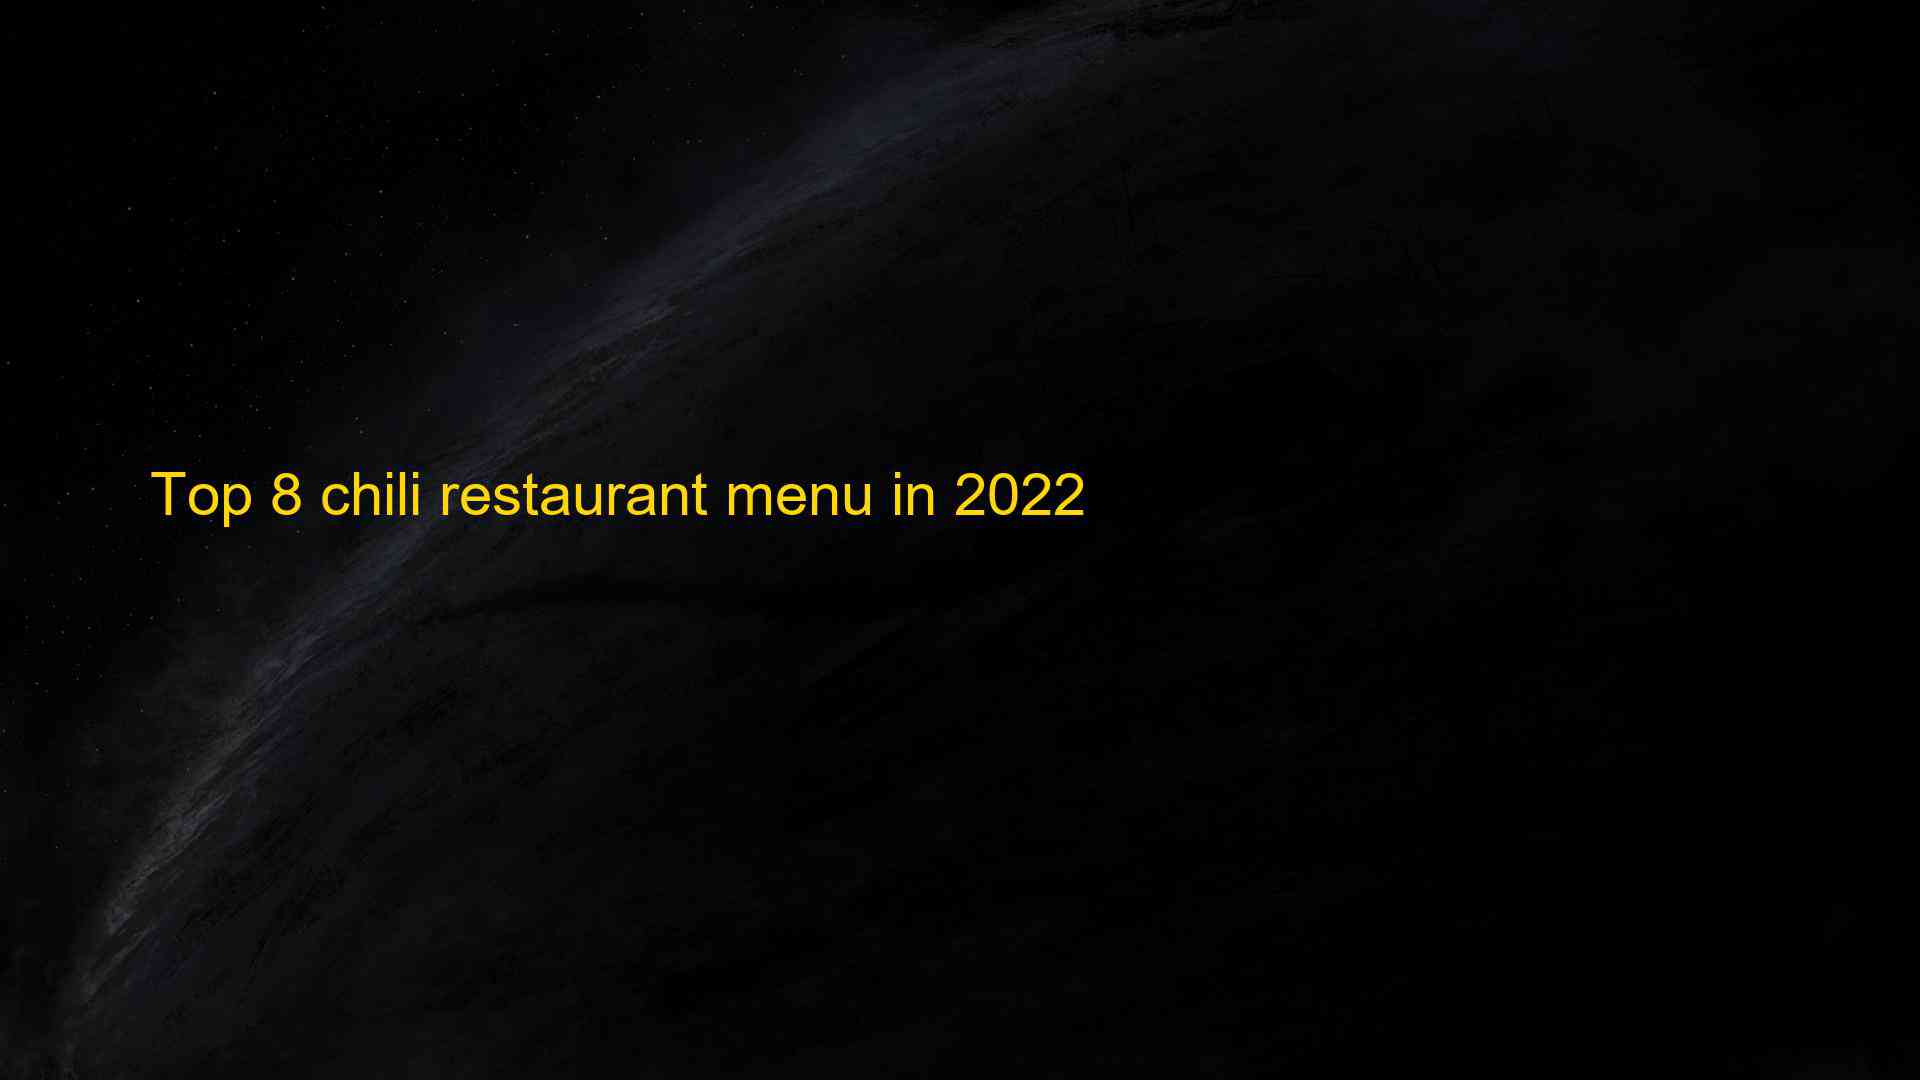 Top 8 chili restaurant menu in 2022 1663405884